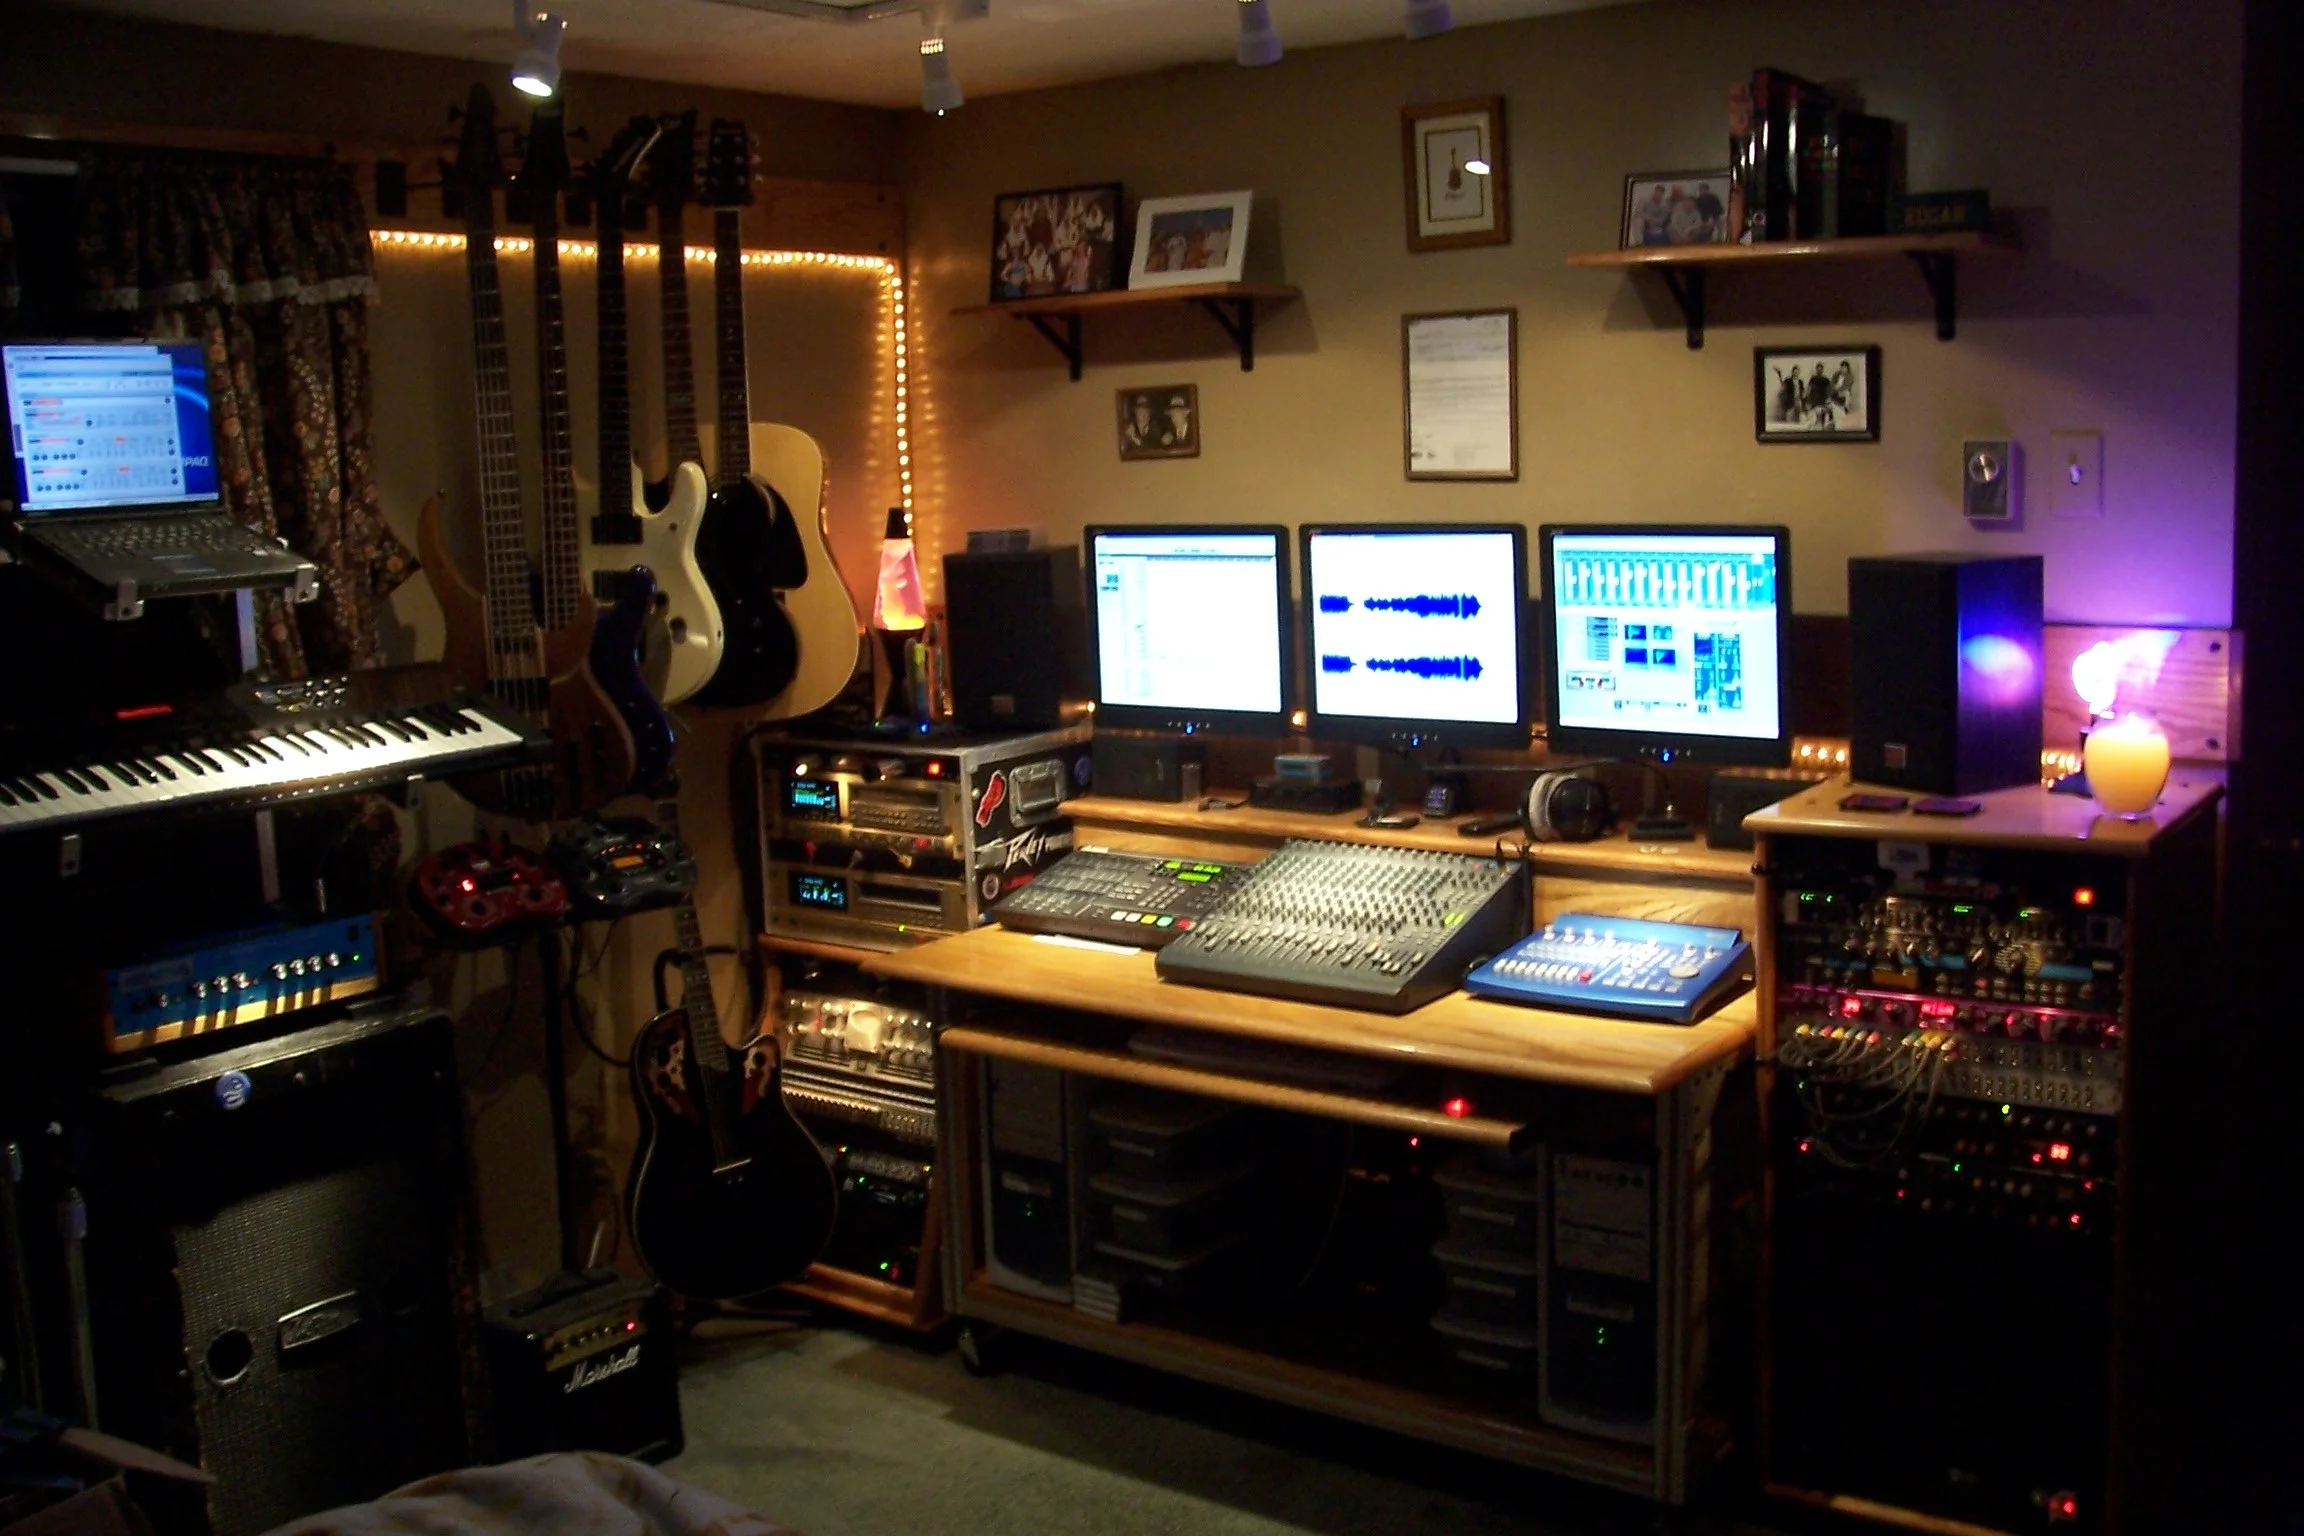 Home music studio ideas on pinterest home music studios music studios and home download music studio wallpaper